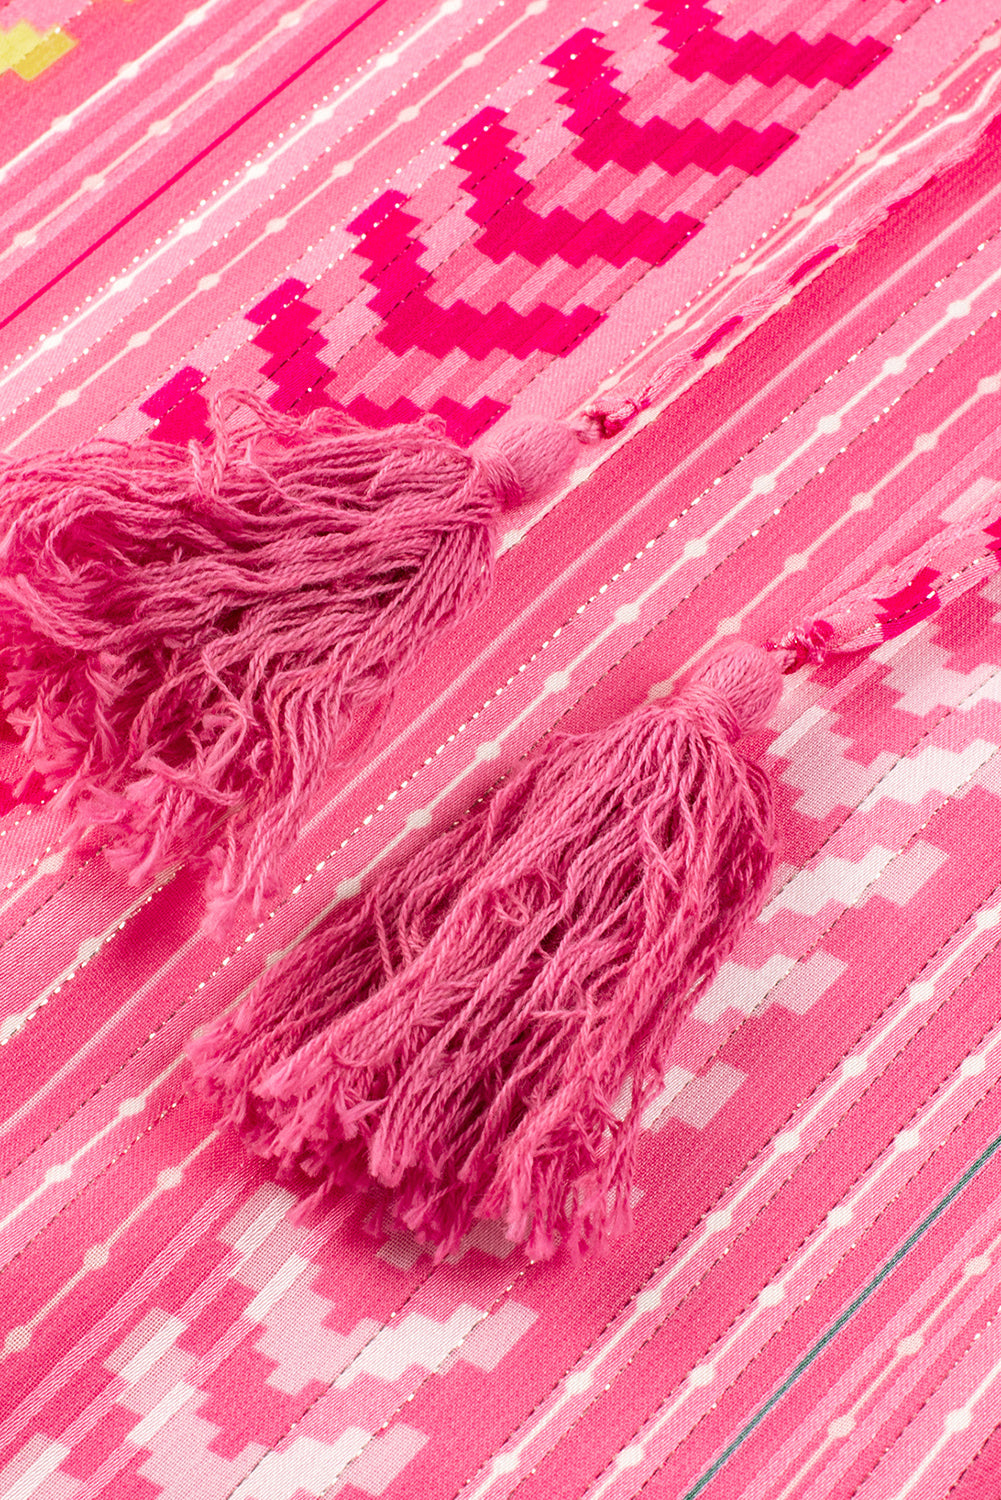 Pink Boho Printed Tasseled Maxi Skirt